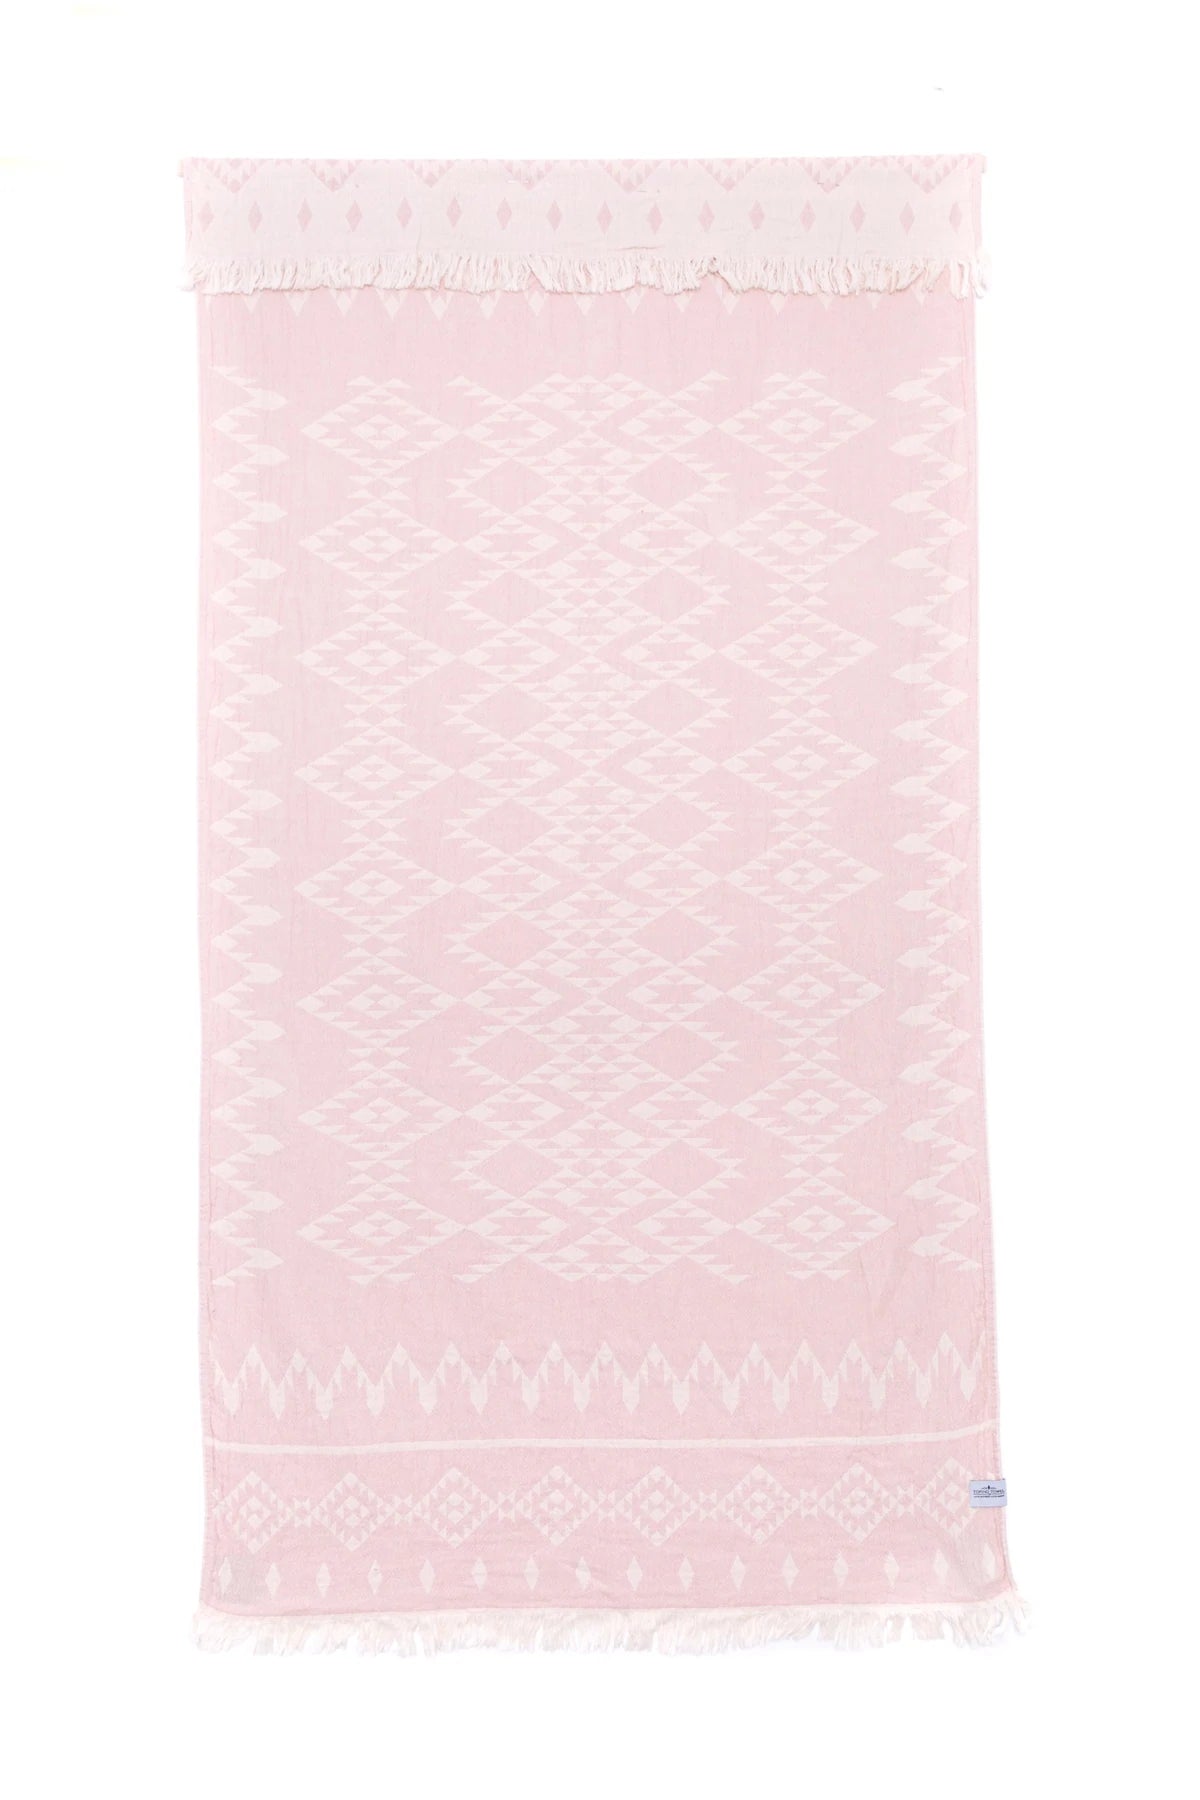 Tofino Towel Coastal // Rose Smoke - Ulla-La Boutique